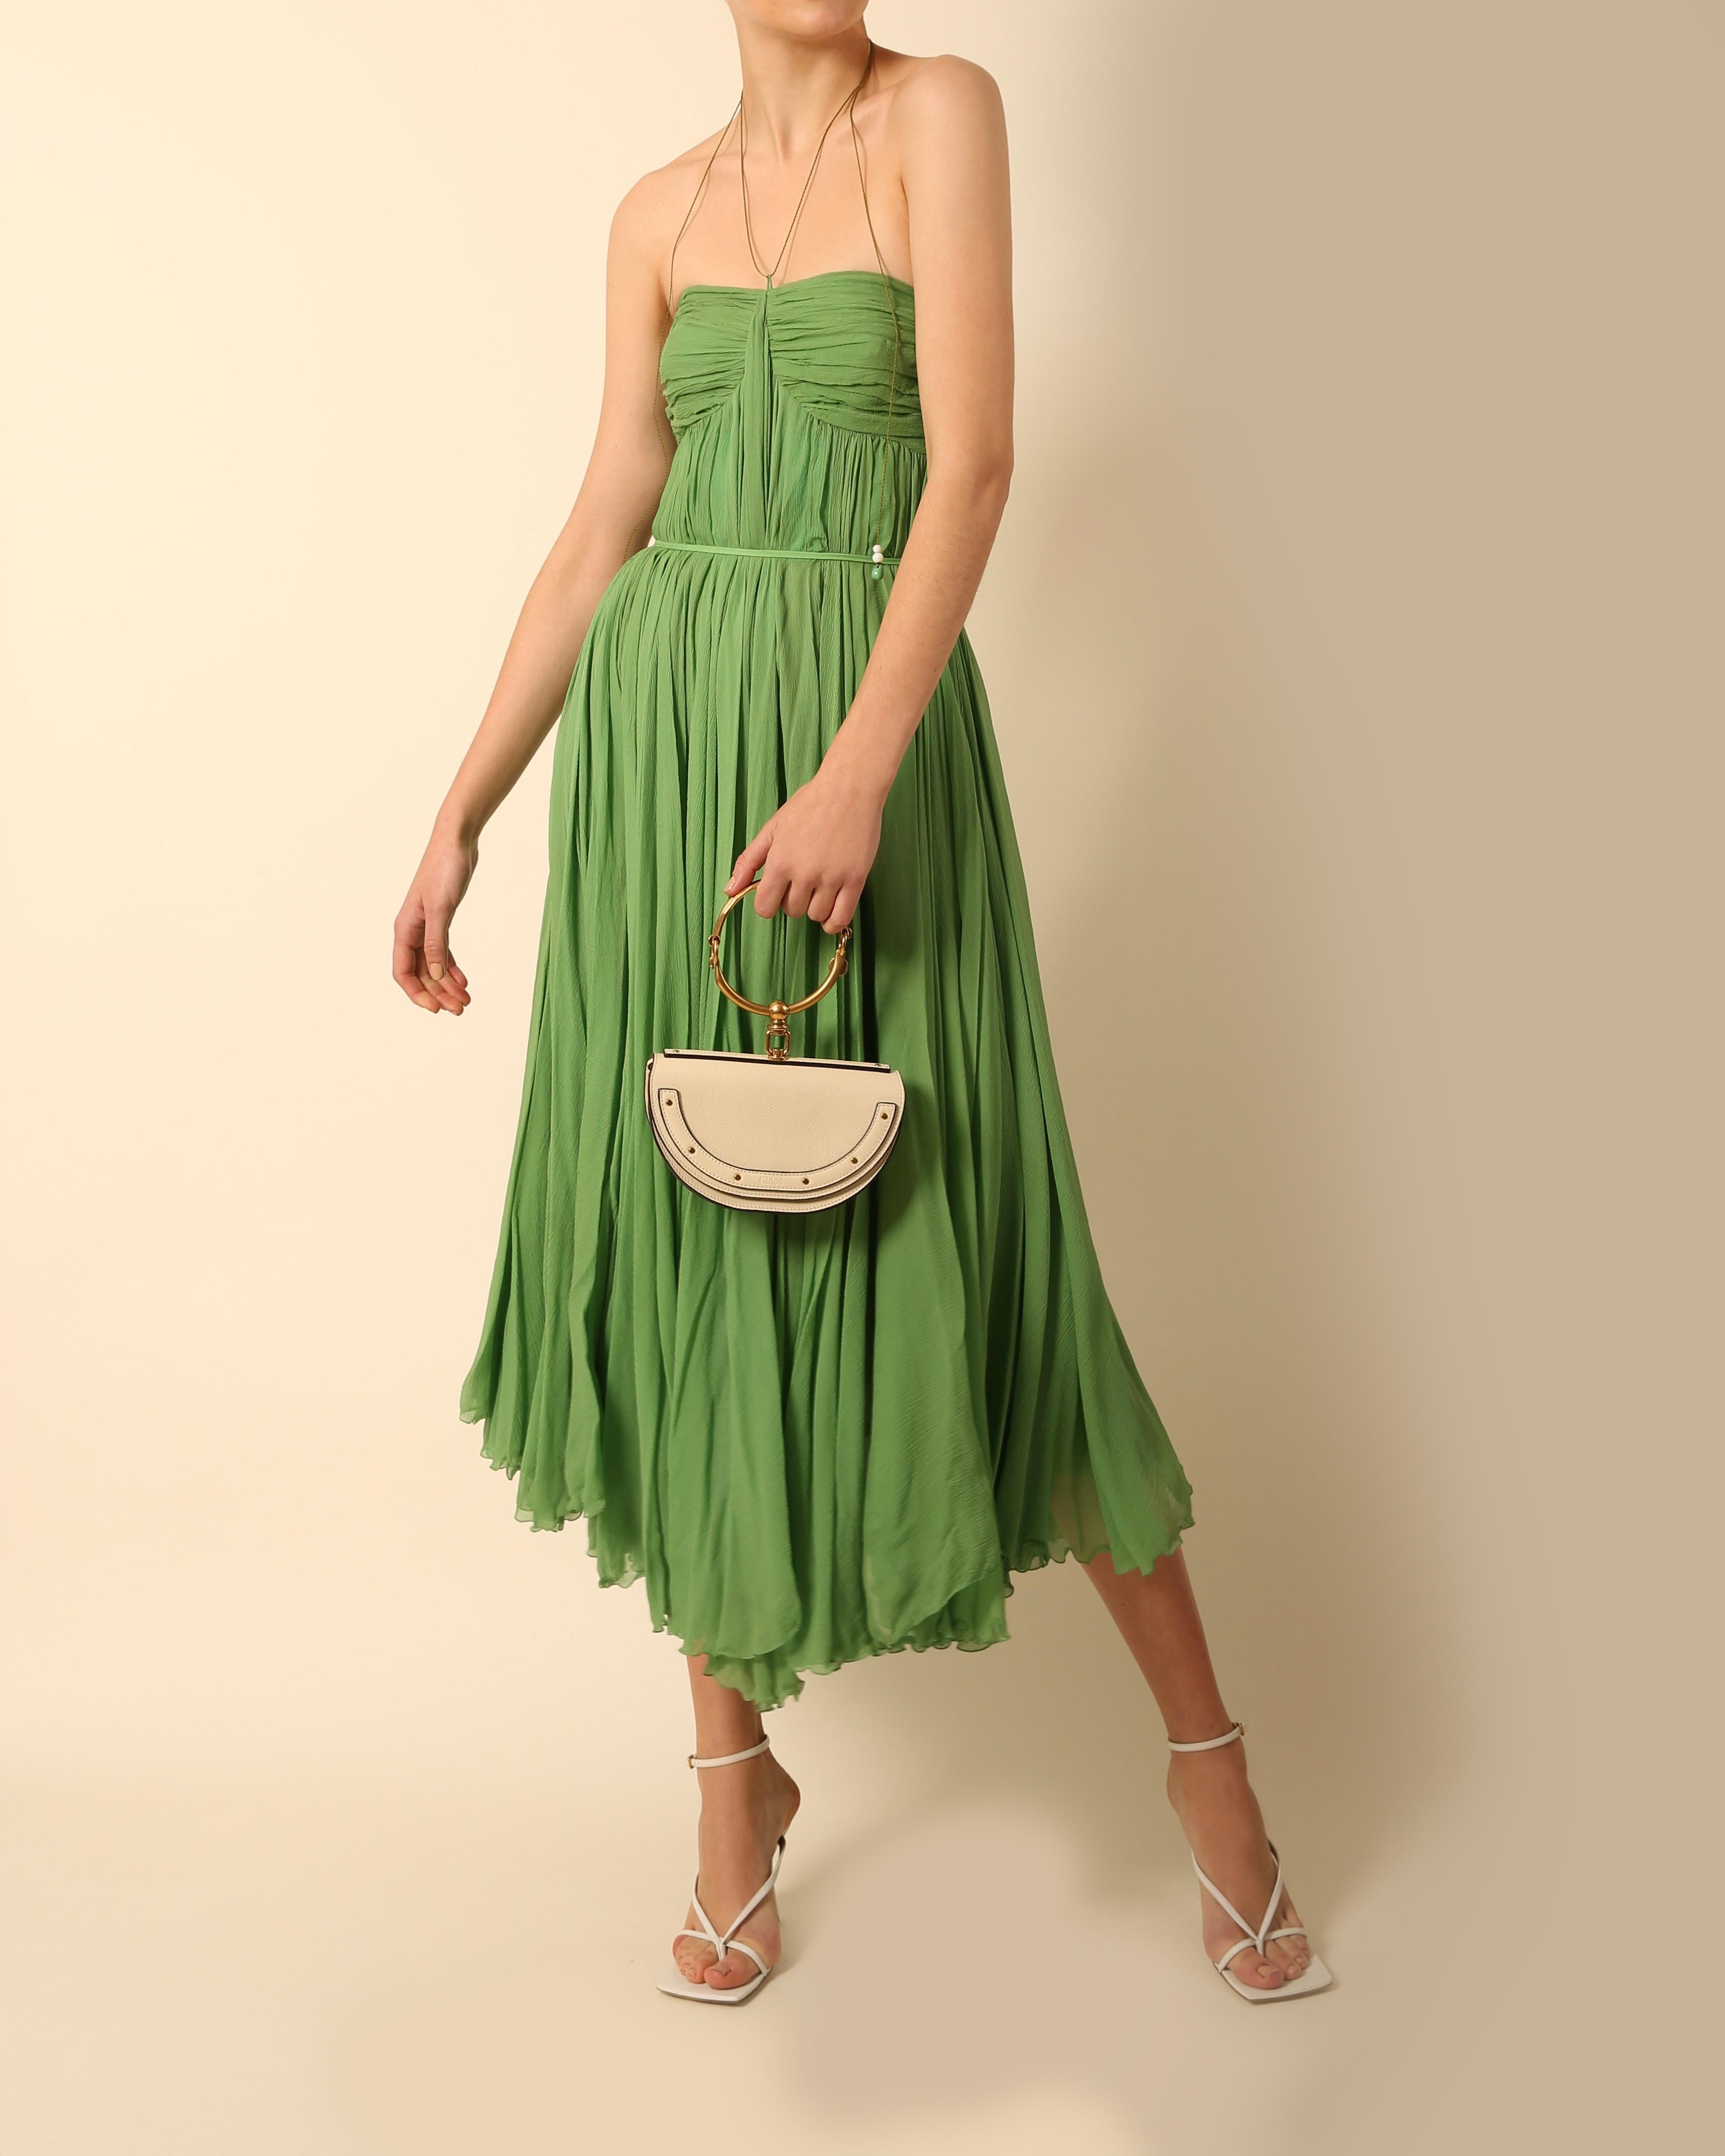 Chloe S04 strapless plisse green silk chiffon layered bustier midi length dress  For Sale 1